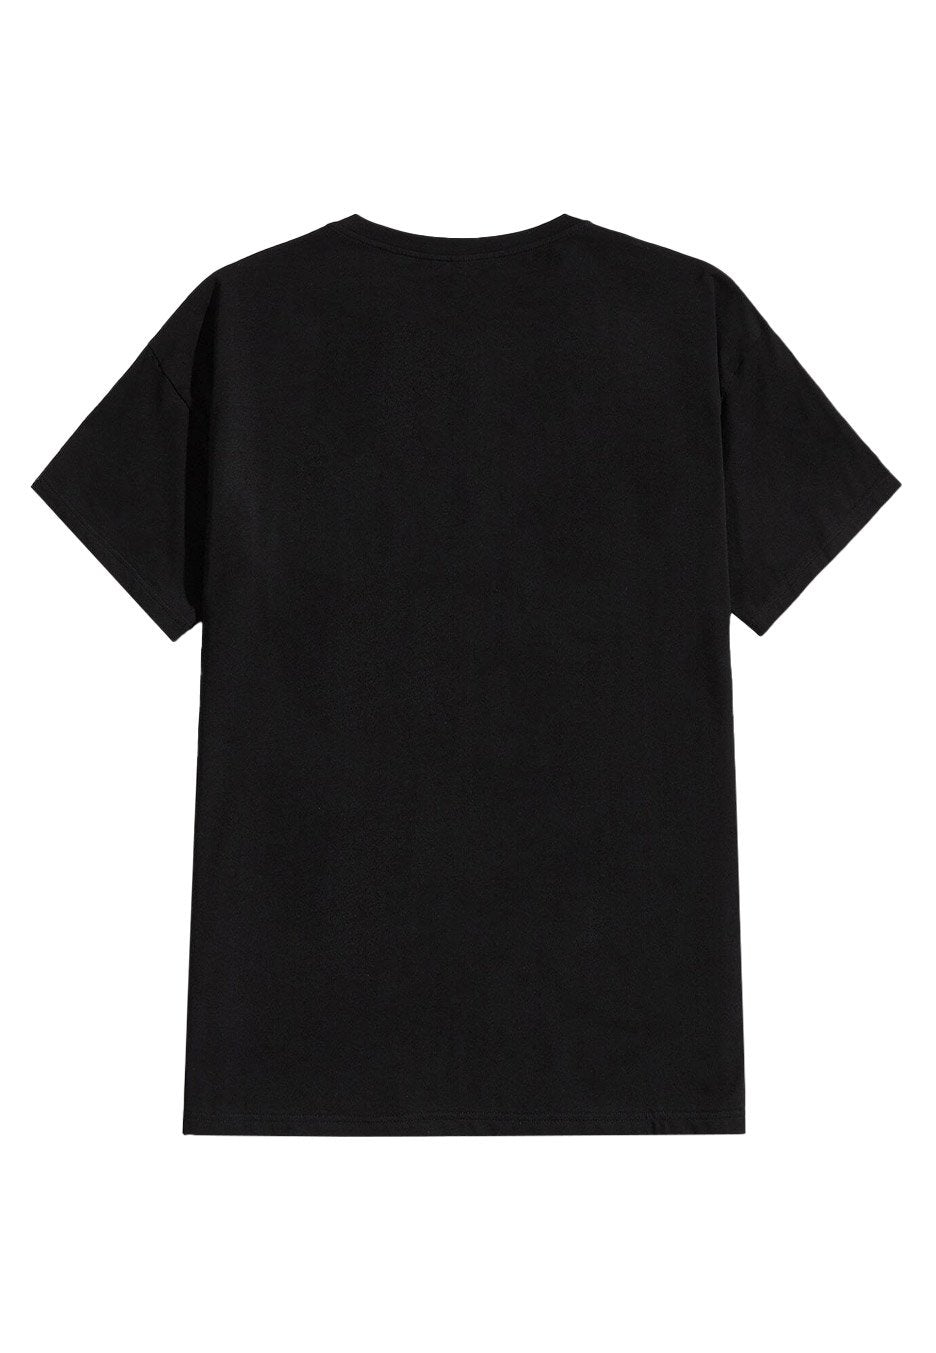 Ghost - Pocket Logo FP - T-Shirt | Neutral-Image